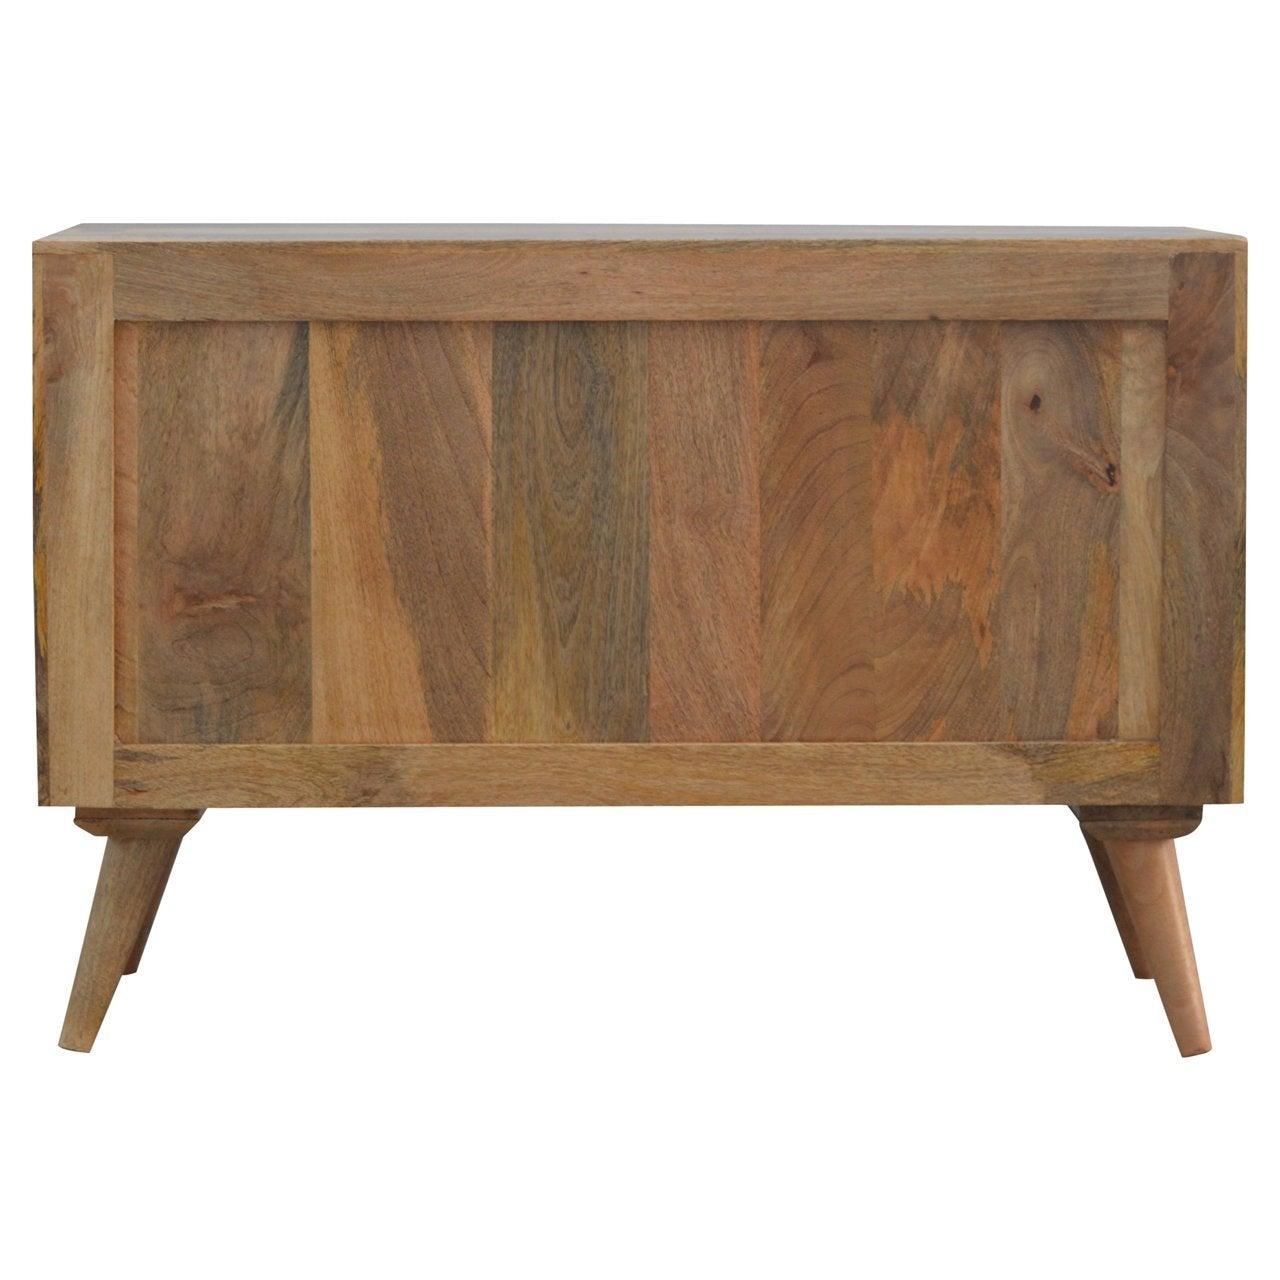 Nordic sliding cabinet with 4 drawers - crimblefest furniture - image 13